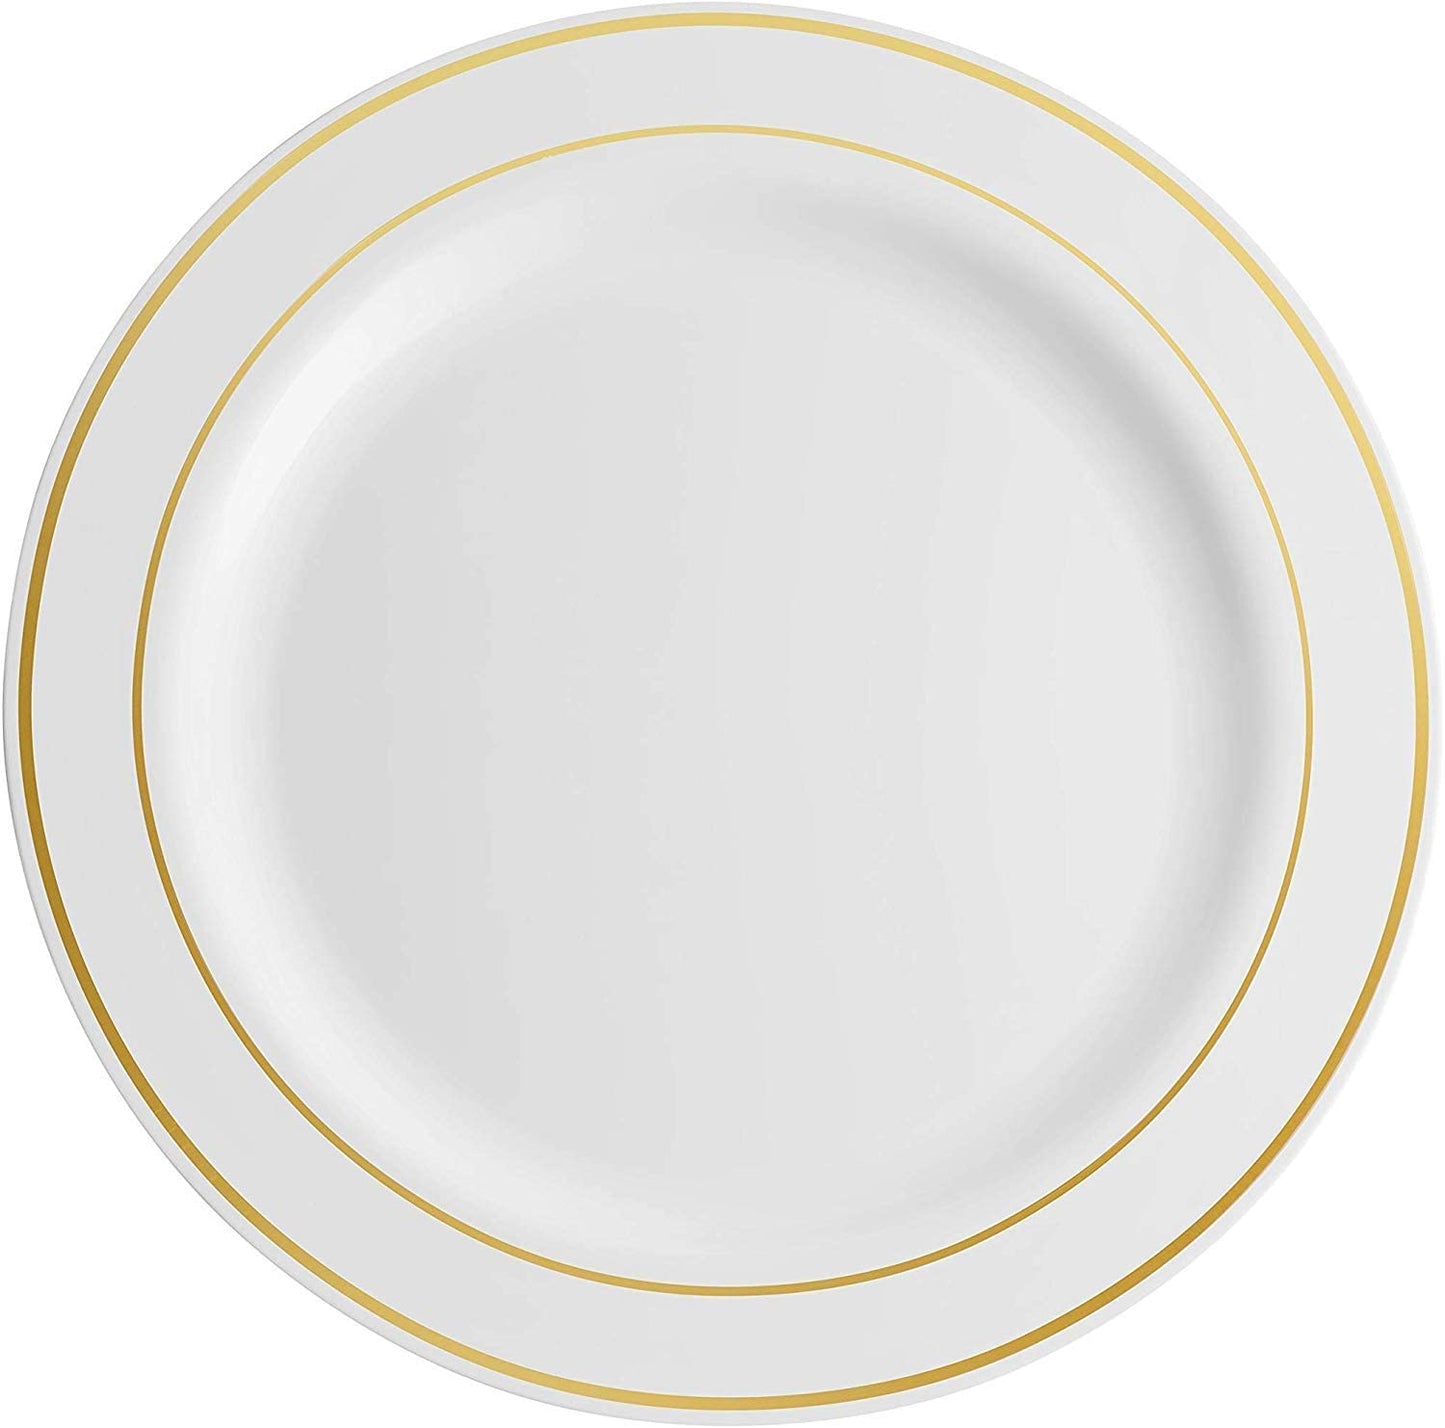 Munfix 100 Piece Plastic Party Plates White Gold Rim, Premium 10.25 Inch Dinner Elegant Fancy Heavy Duty Disposable Wedding Plates